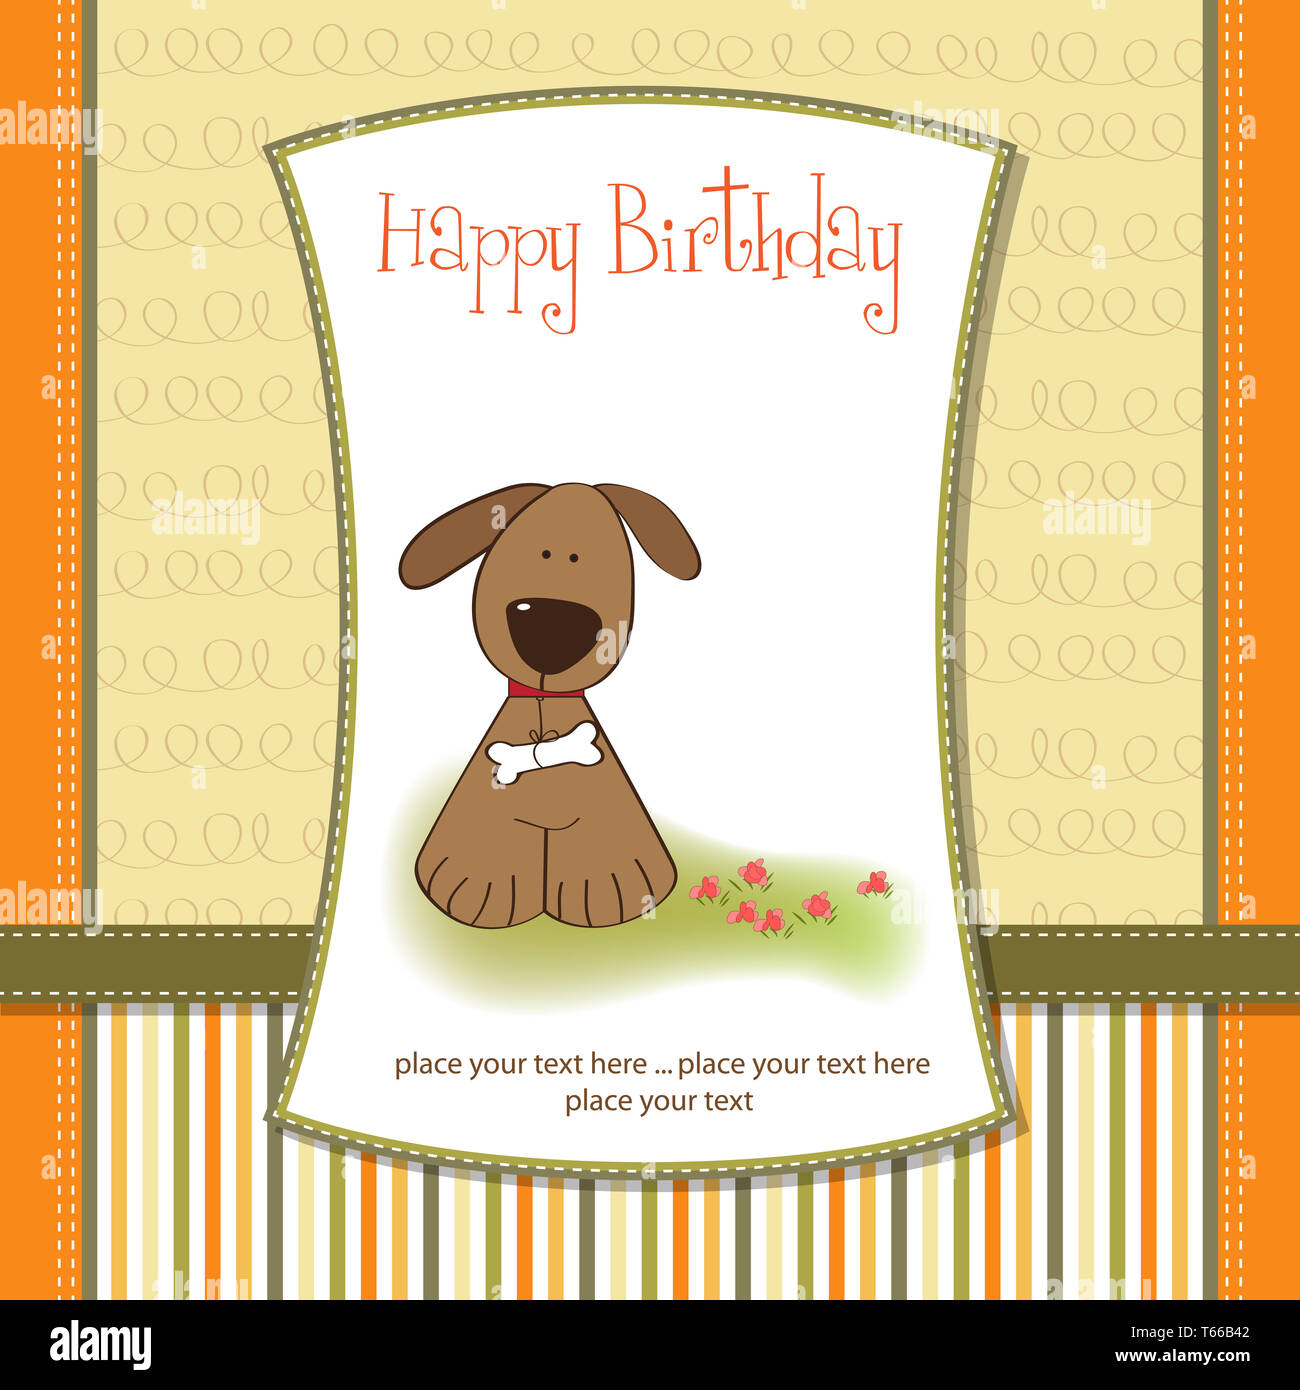 birthday card with dog Stock Photo - Alamy